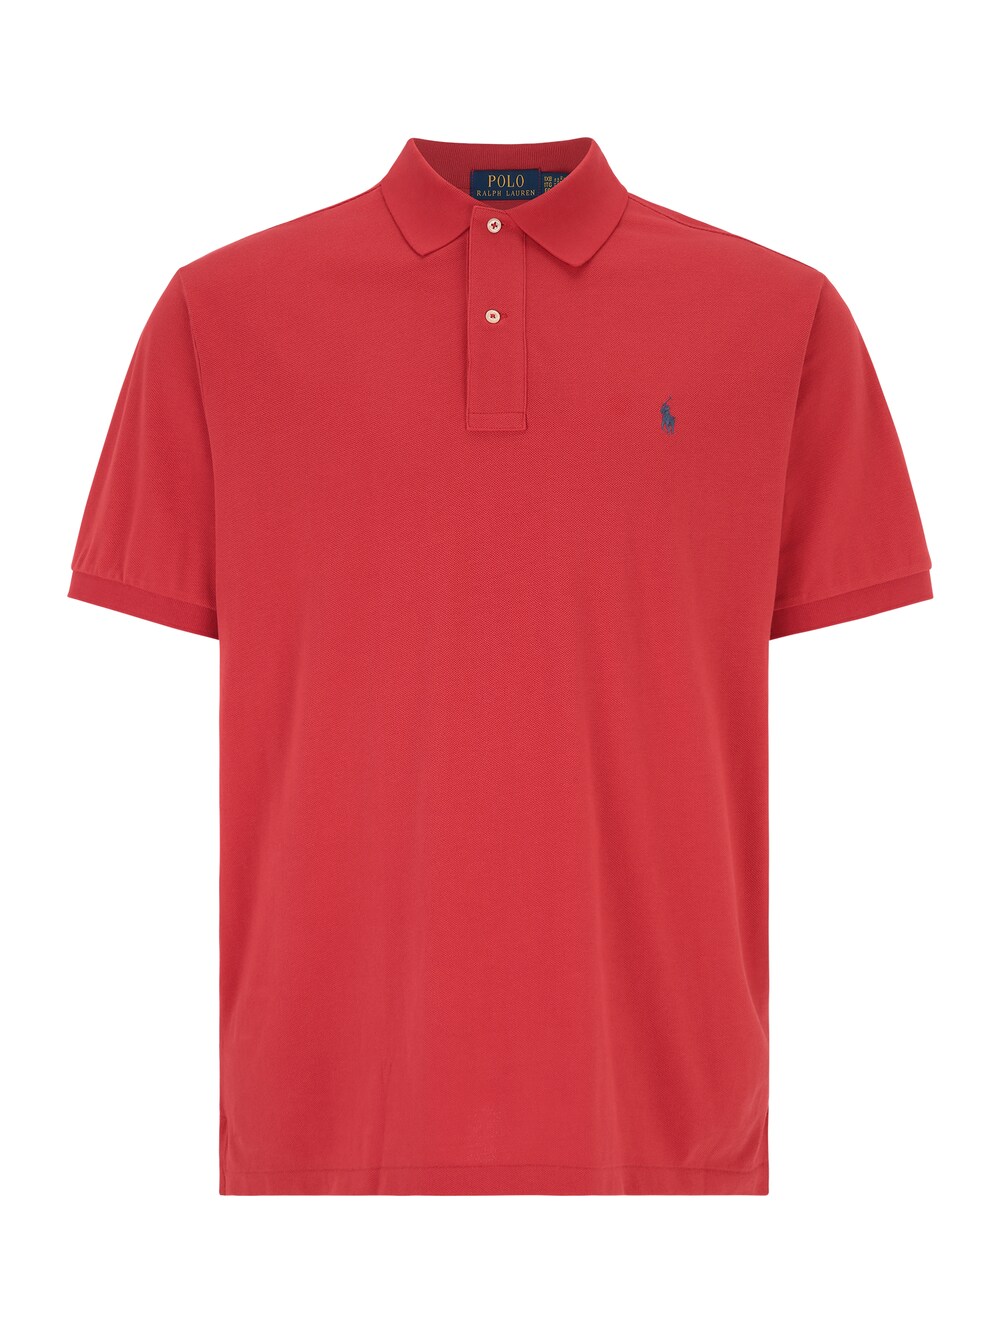 Футболка Polo Ralph Lauren Big & Tall, красный рубашка polo ralph lauren big